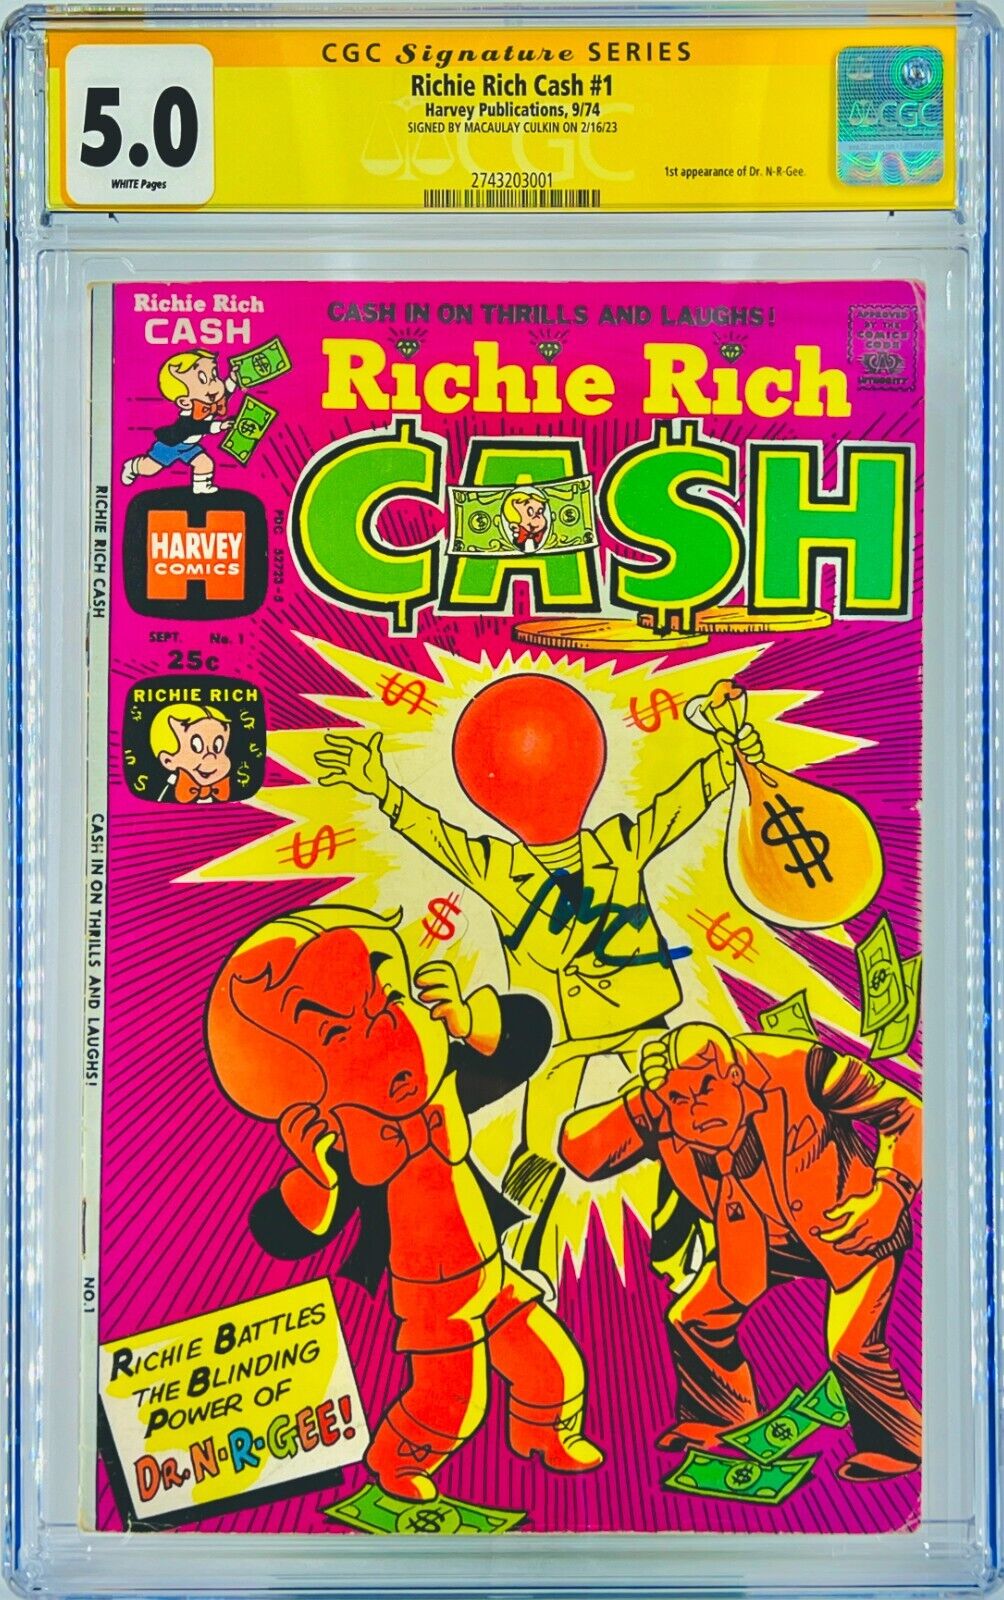 Macaulay Culkin Signed CGC Signature Series Richie Rich Cash #1 Graded 5.0